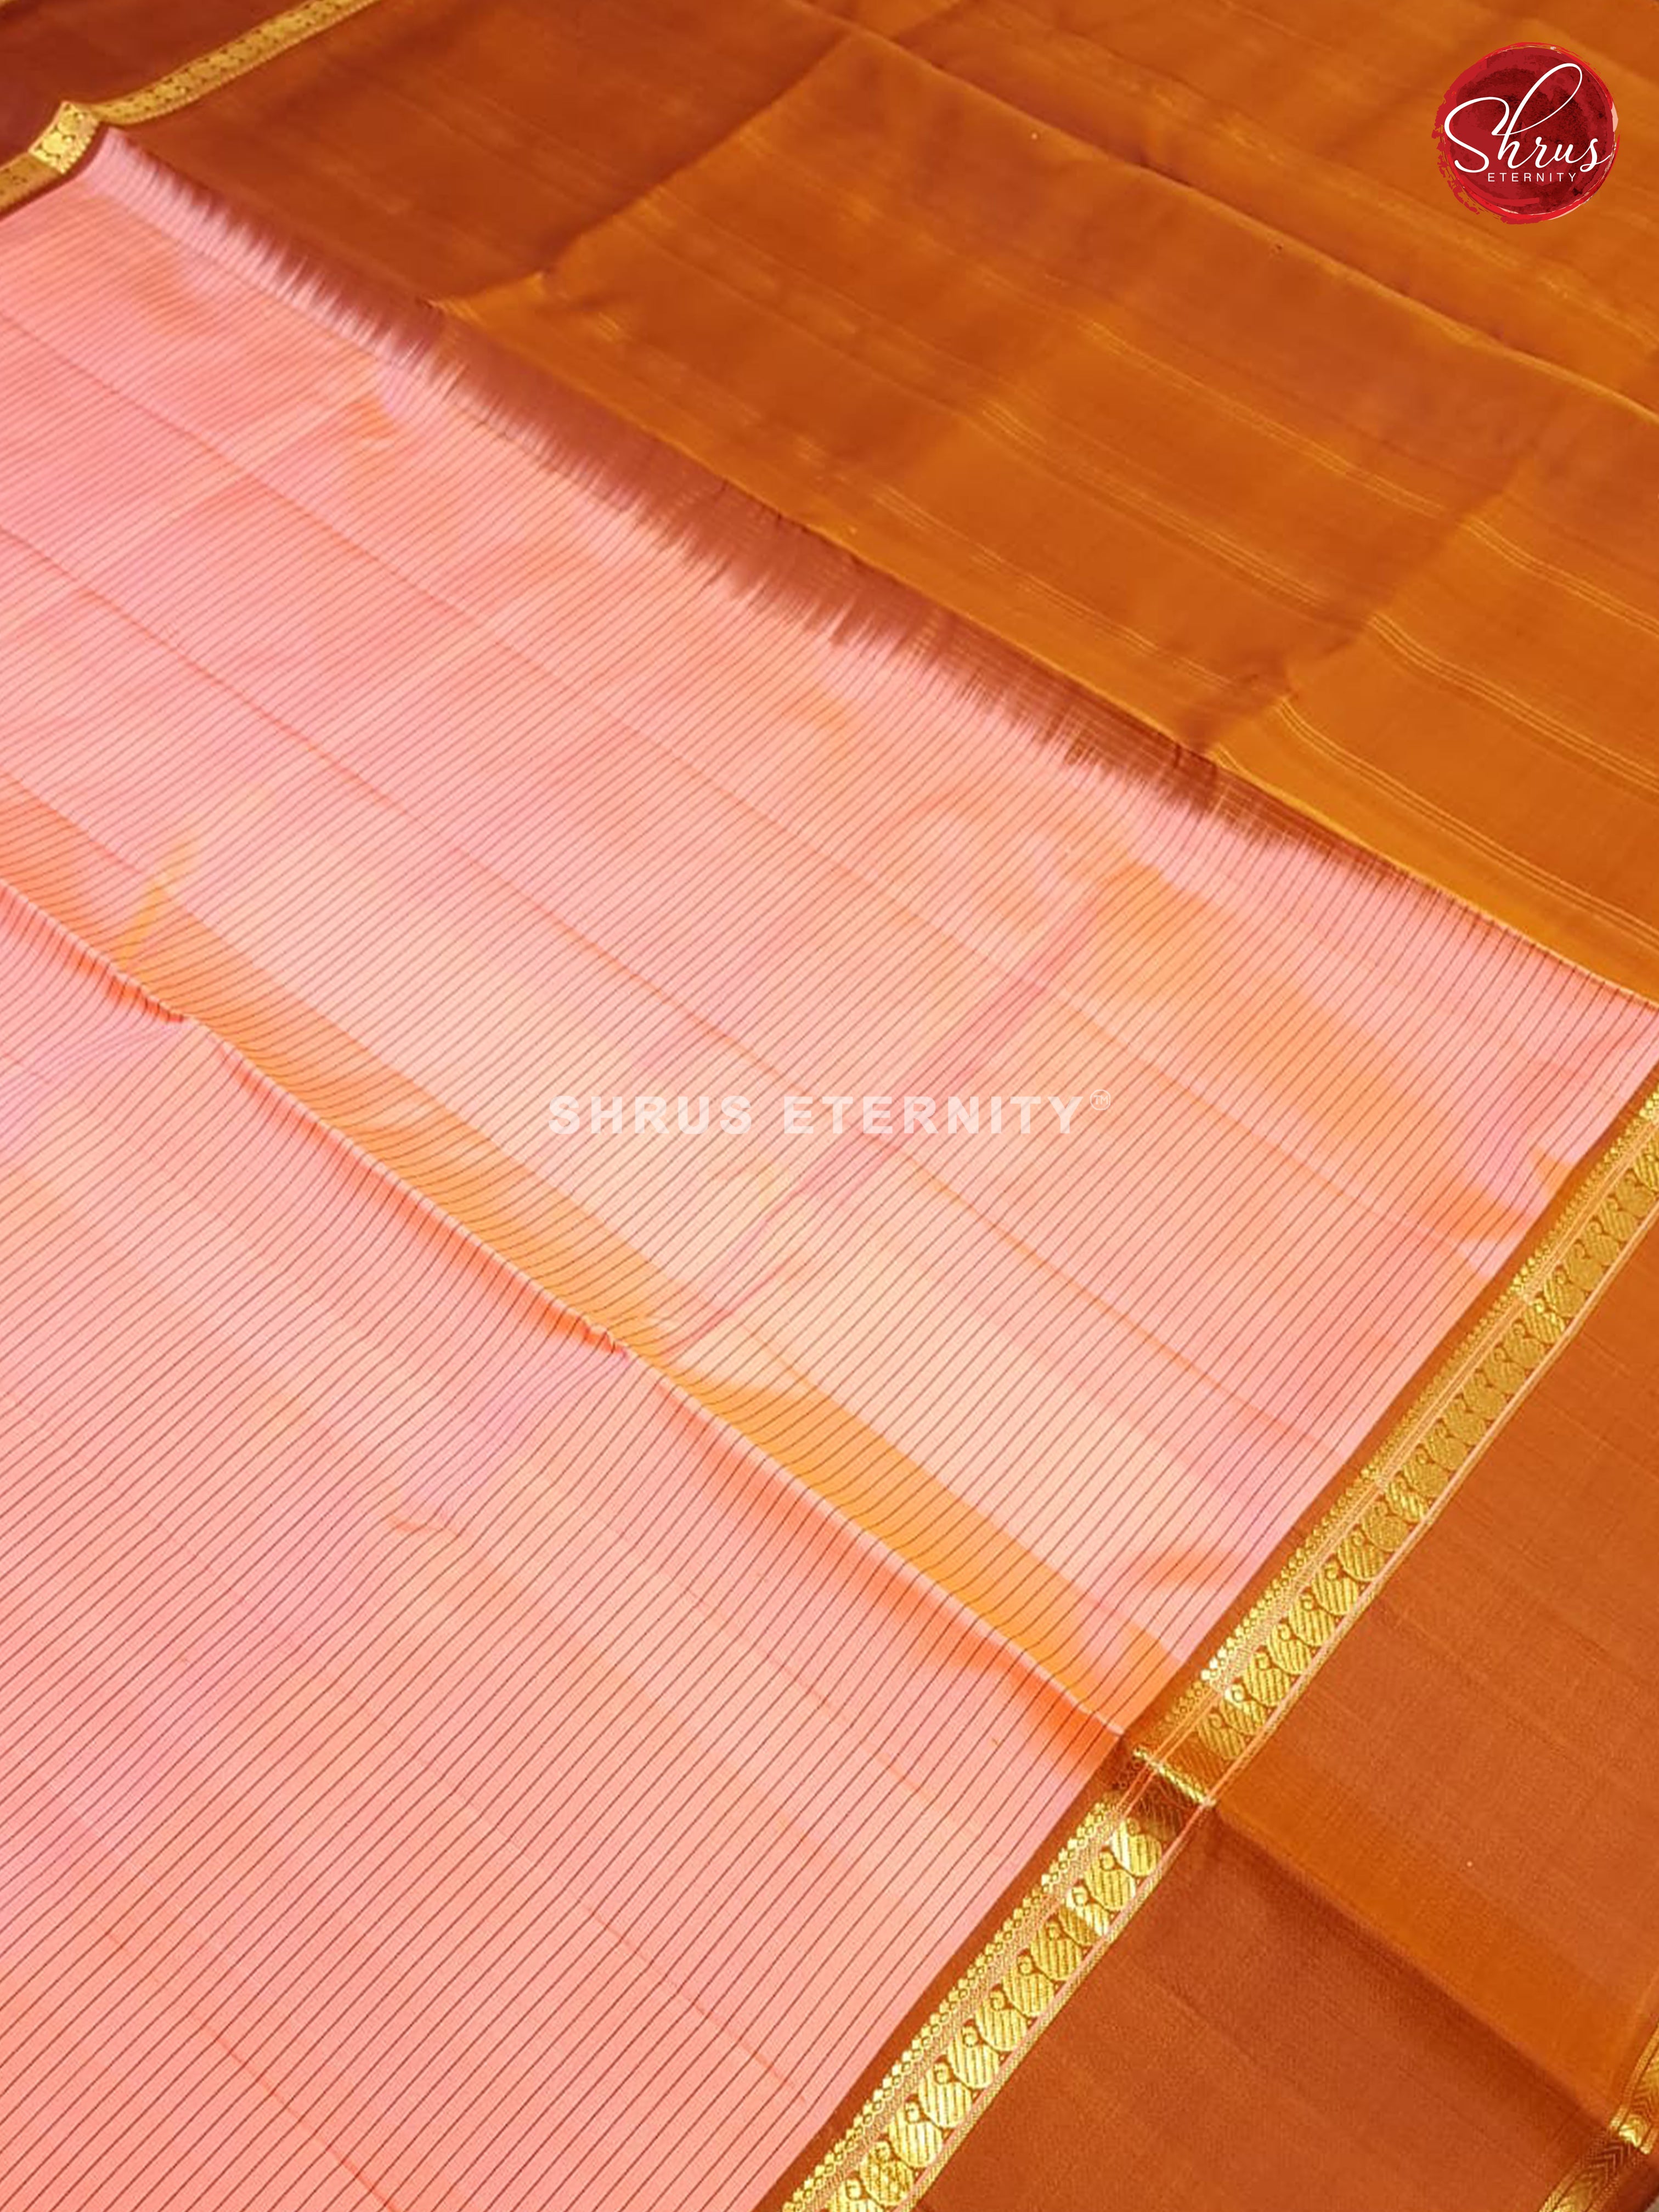 Light Pink & Brown - Soft Silk - Shop on ShrusEternity.com